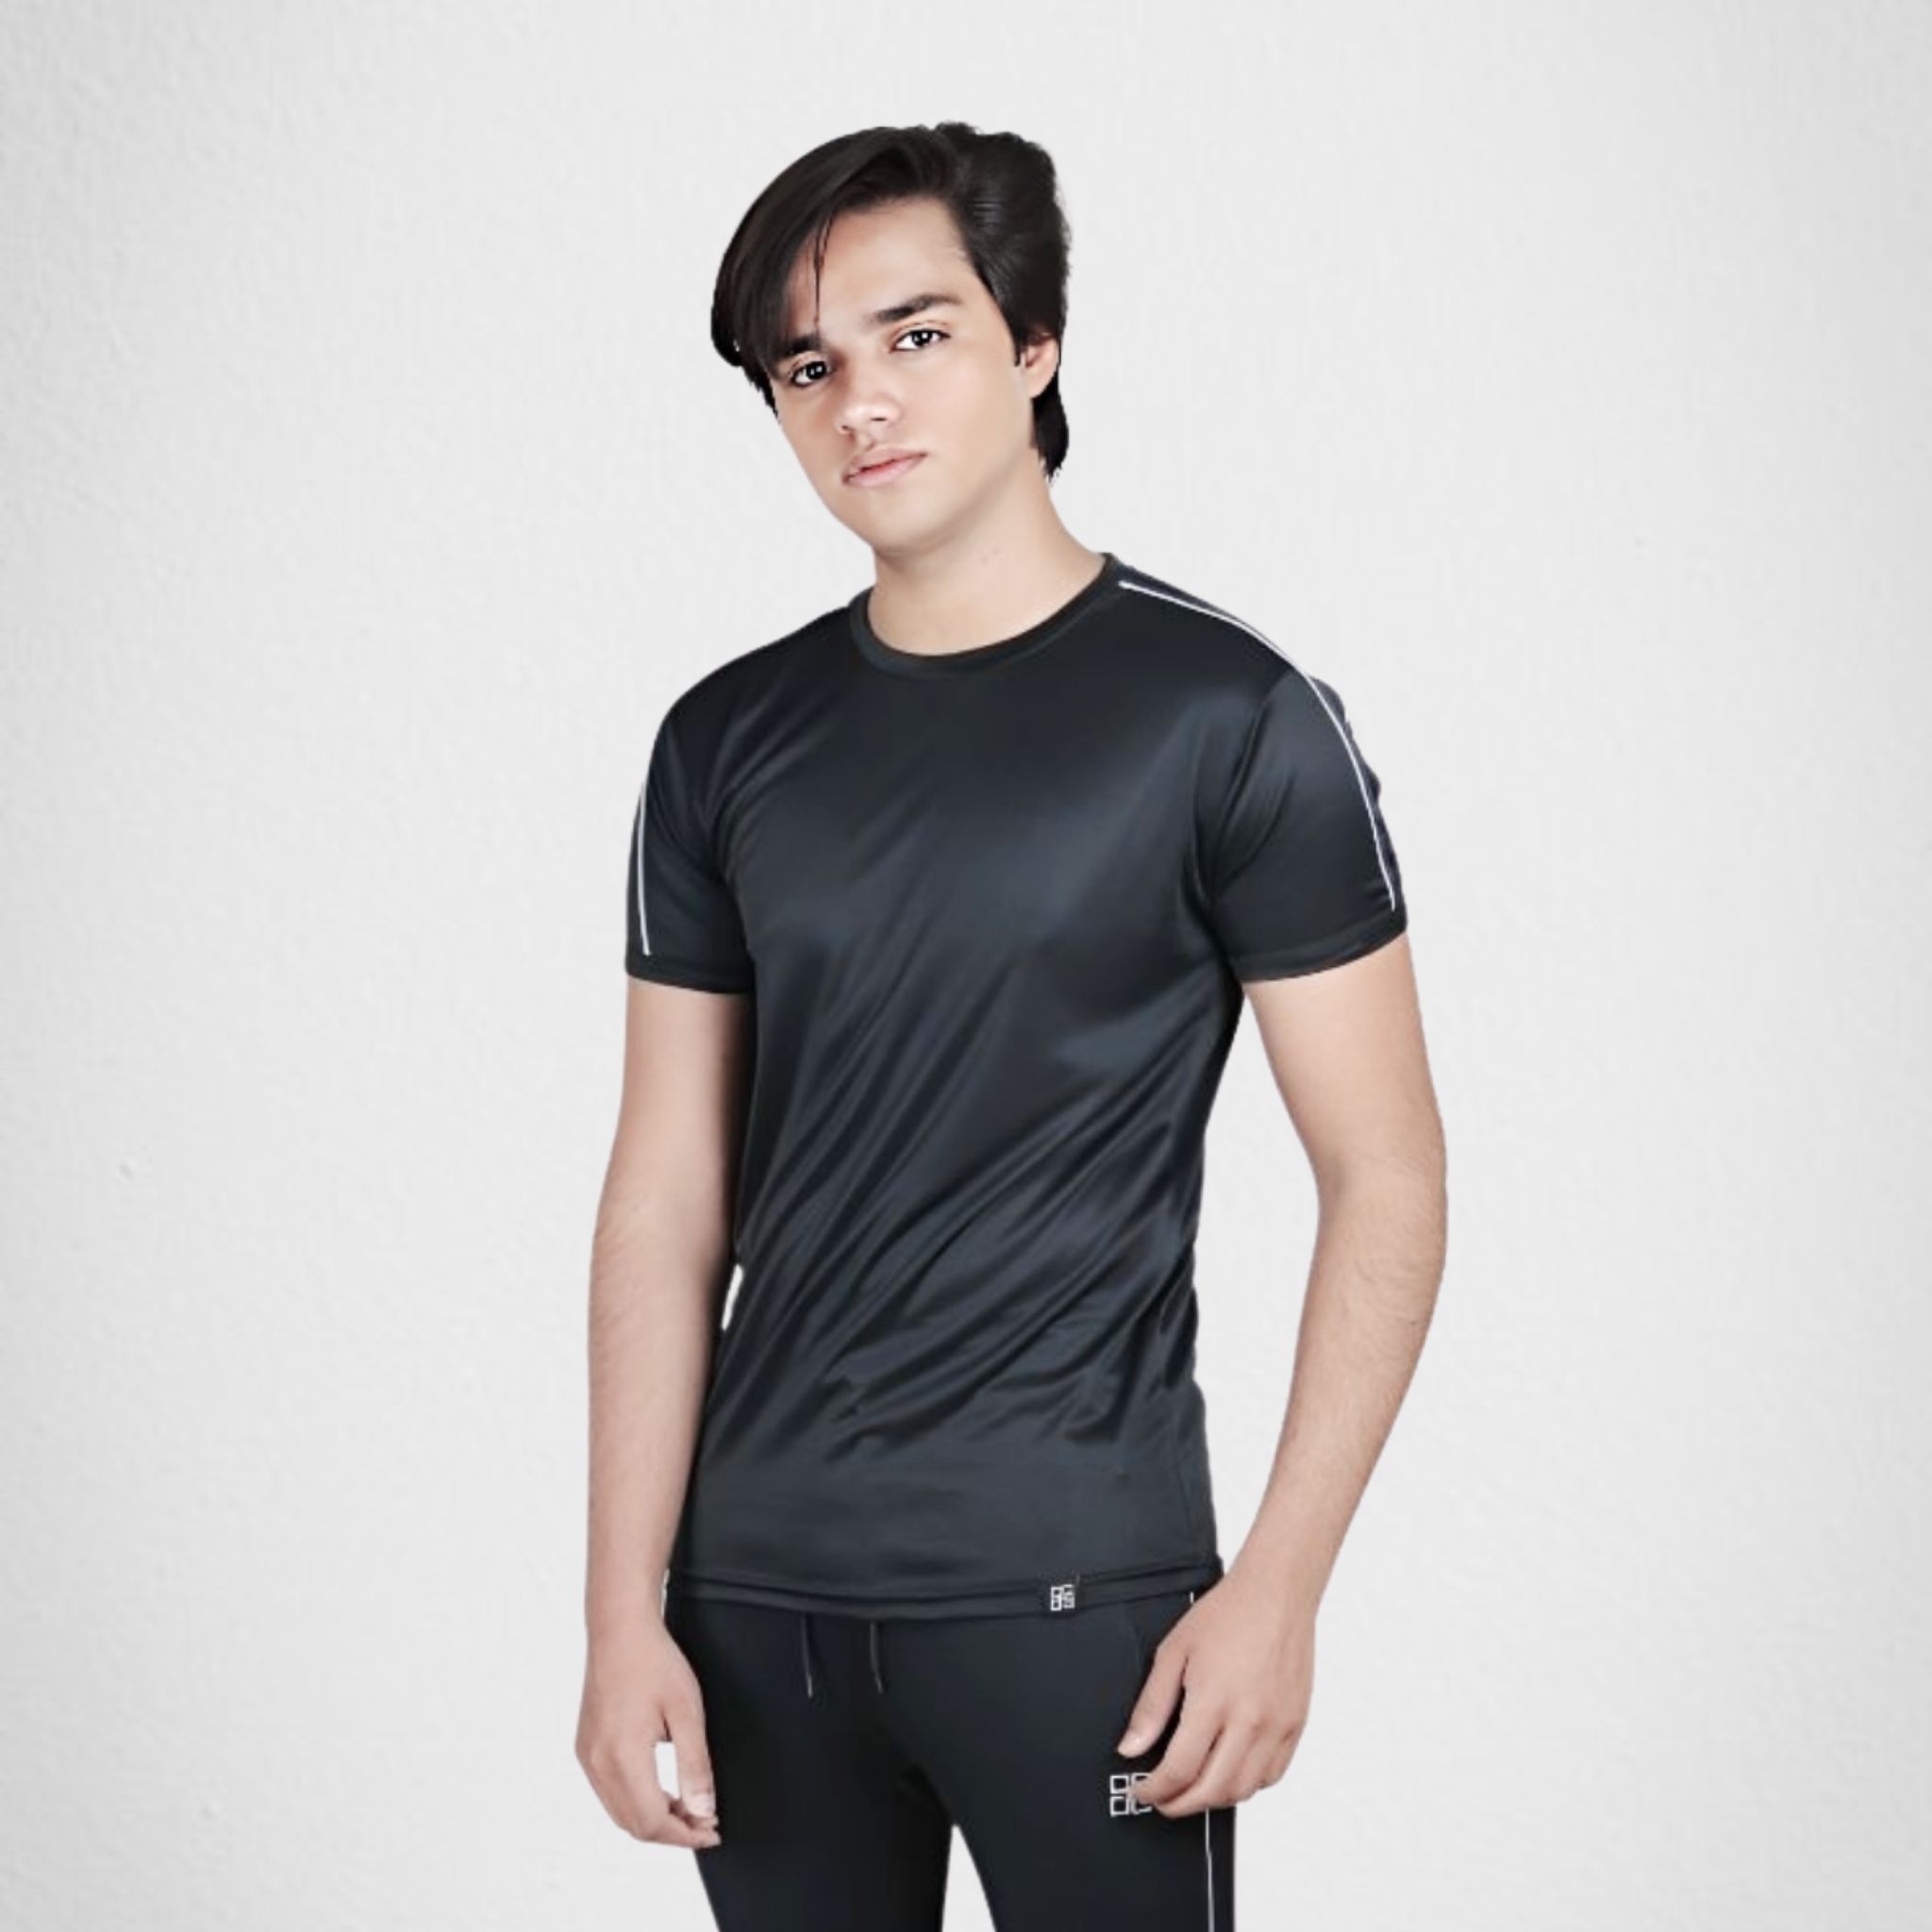 Black Quick Dry Half Sleeves T-Shirt